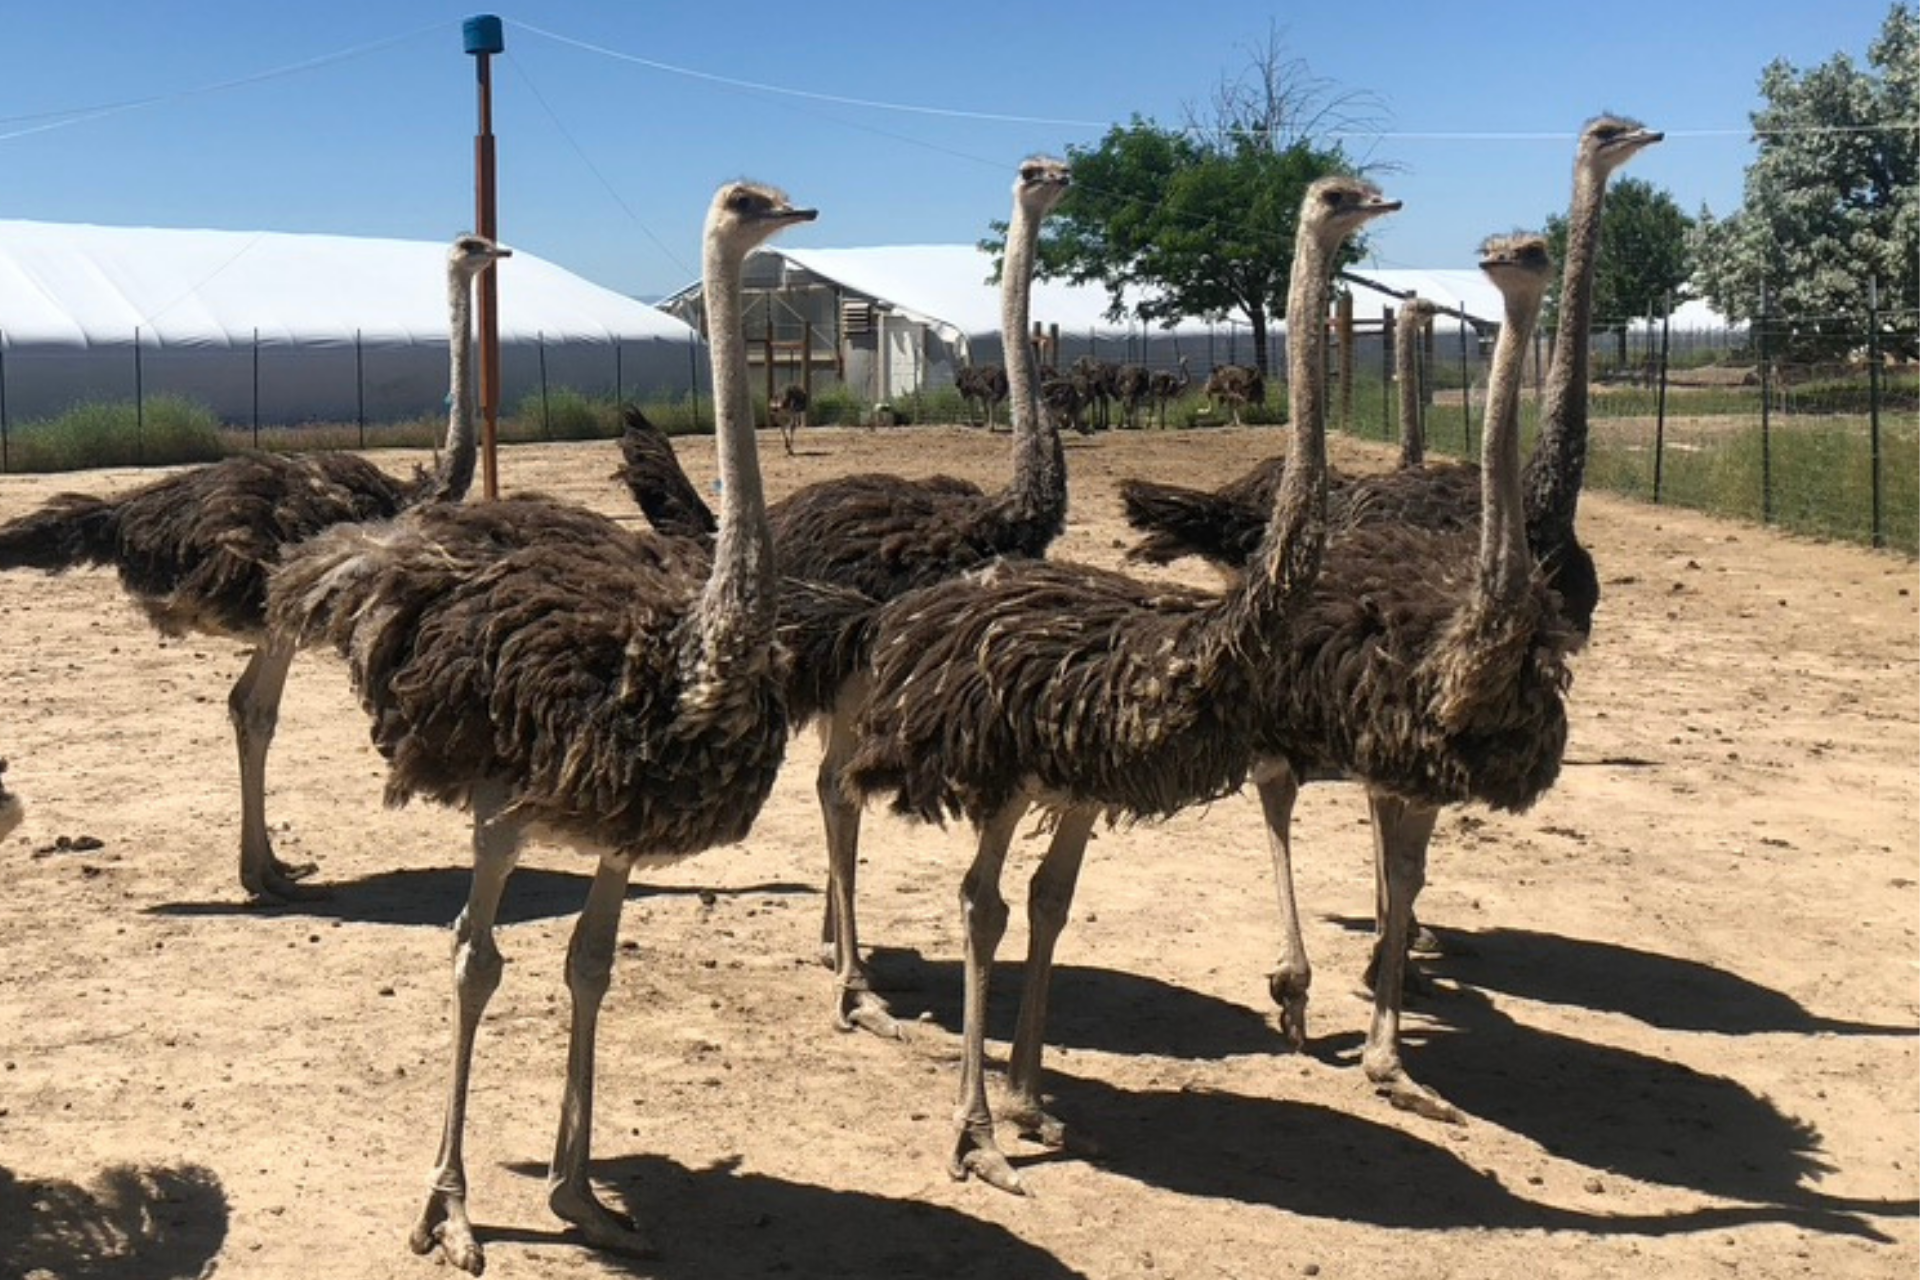 A flock of ostriches.